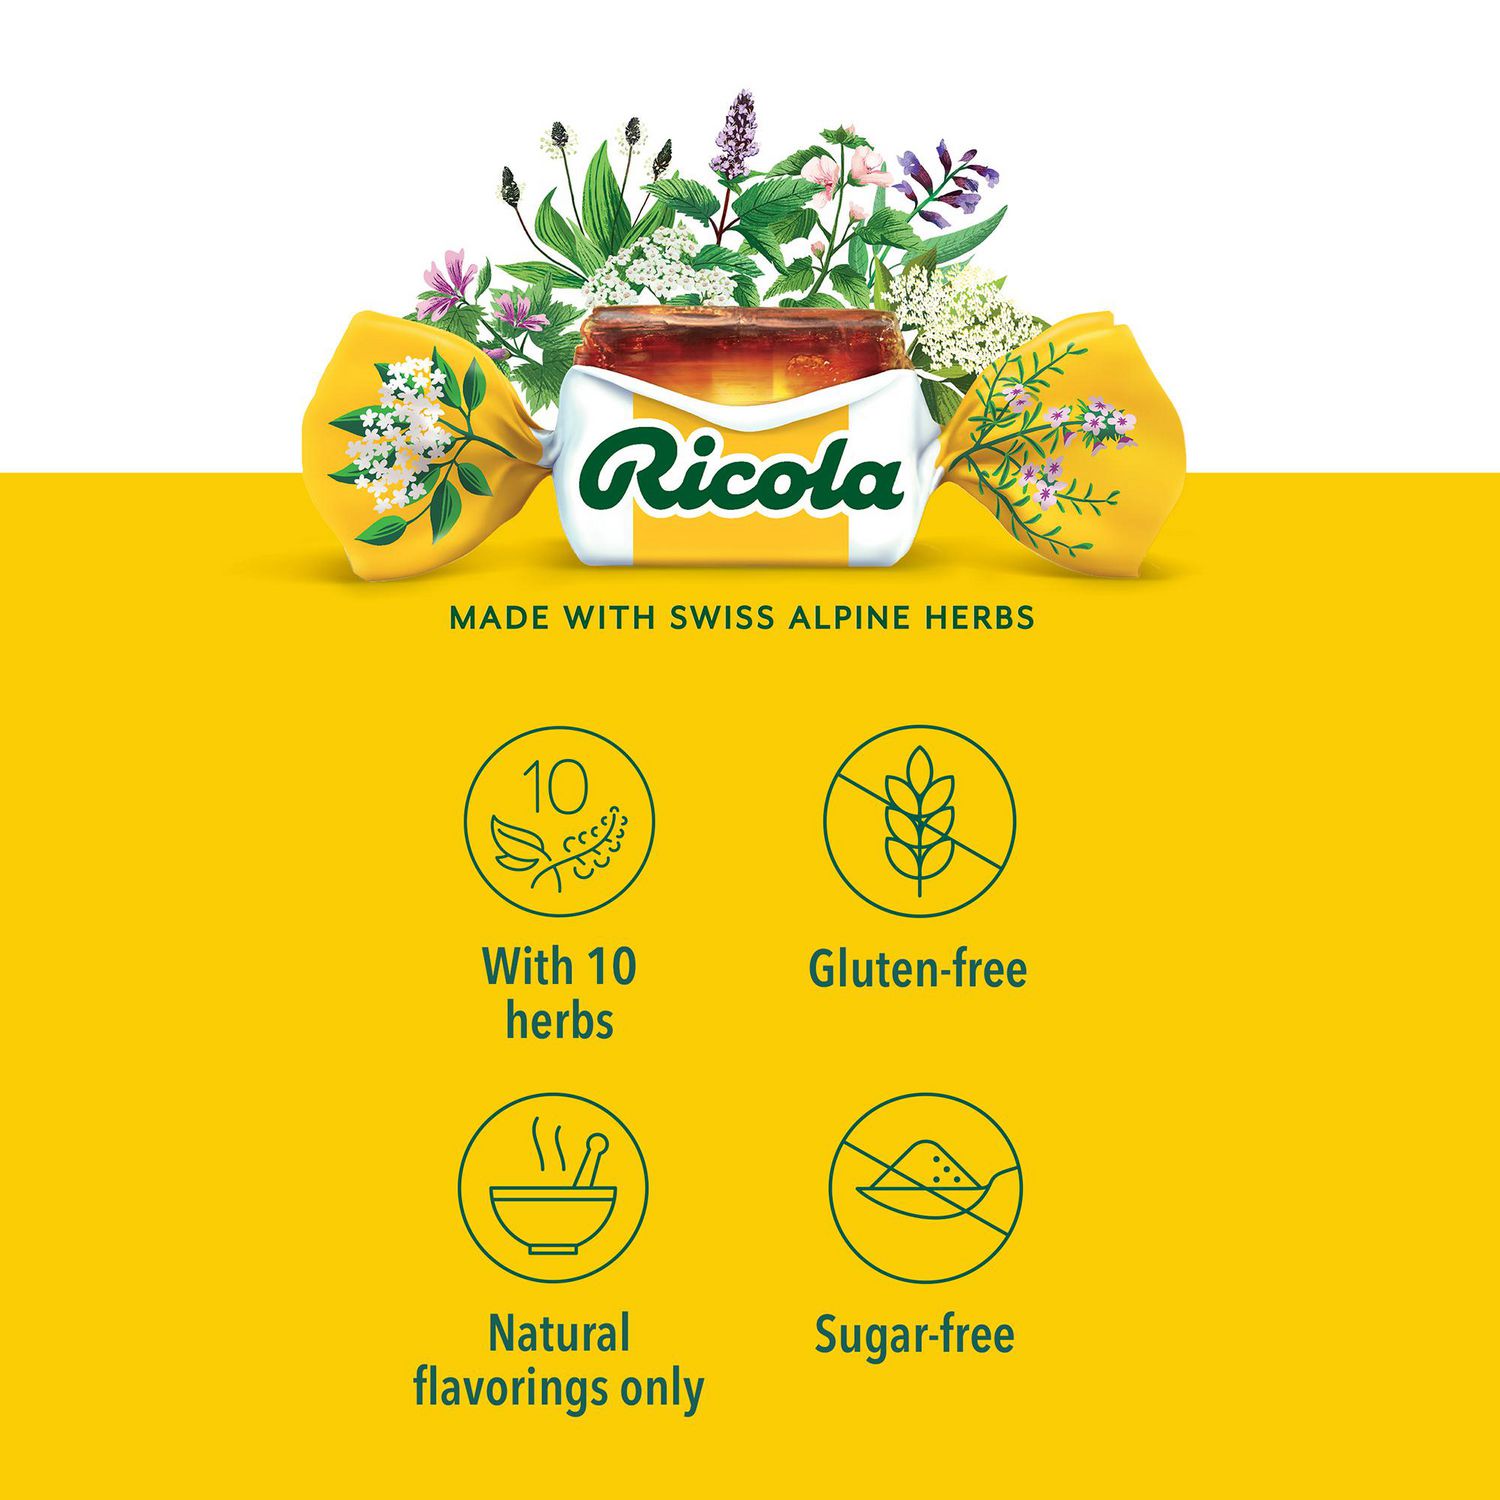 Ricola Green Tea with Echinacea Cough Suppressant Sugar Free 19 Drops 